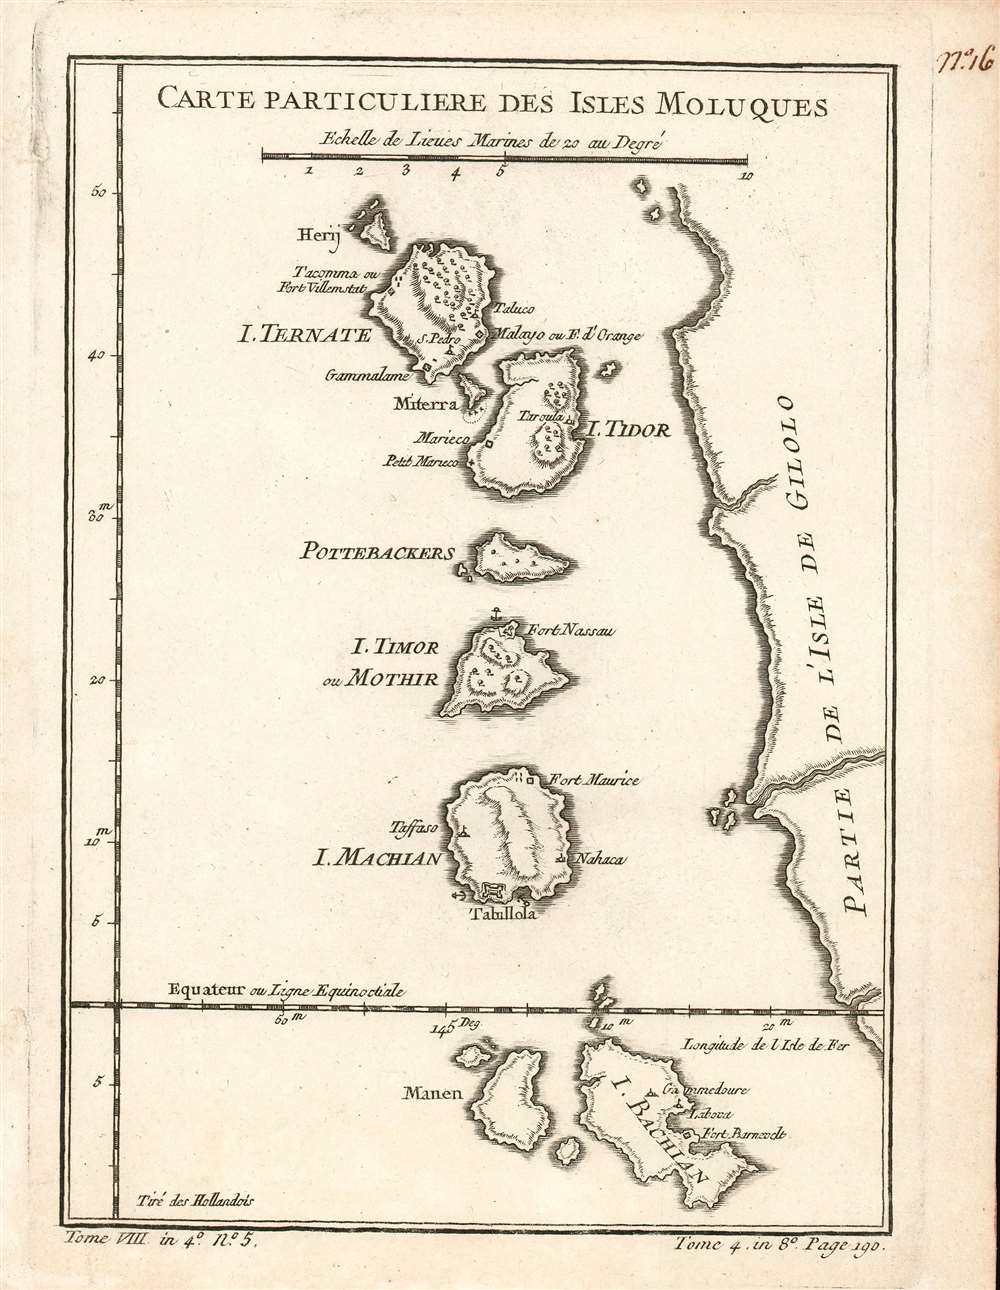 Carte Particuliere Des Isles Moluques. - Main View